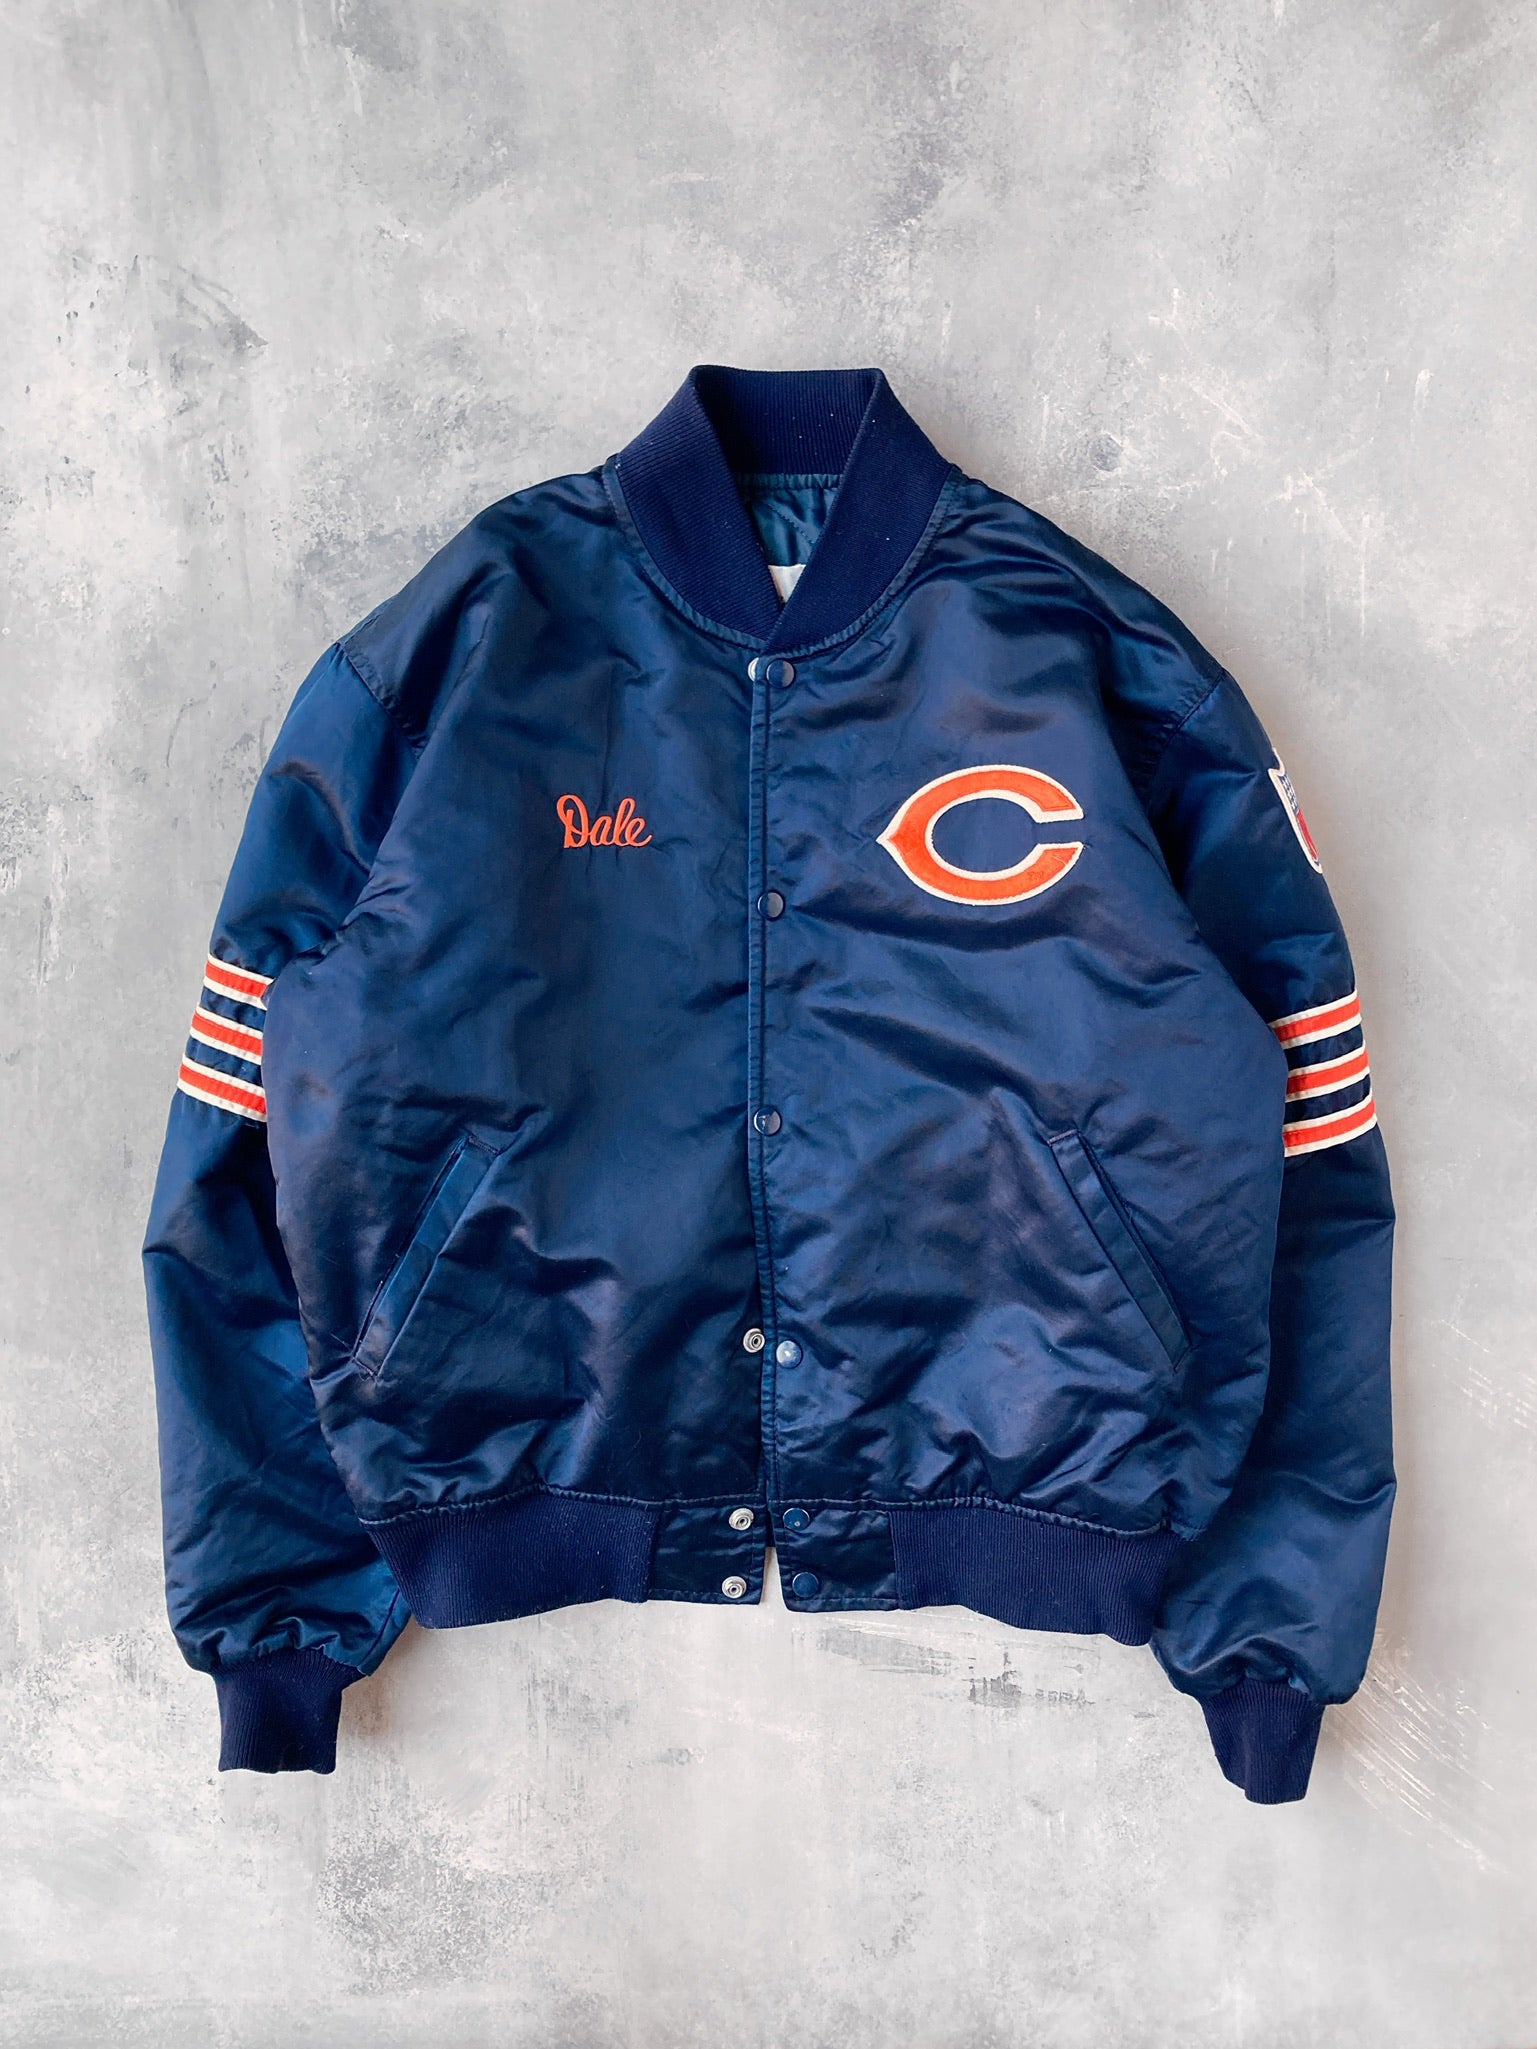 chicago bears jacket